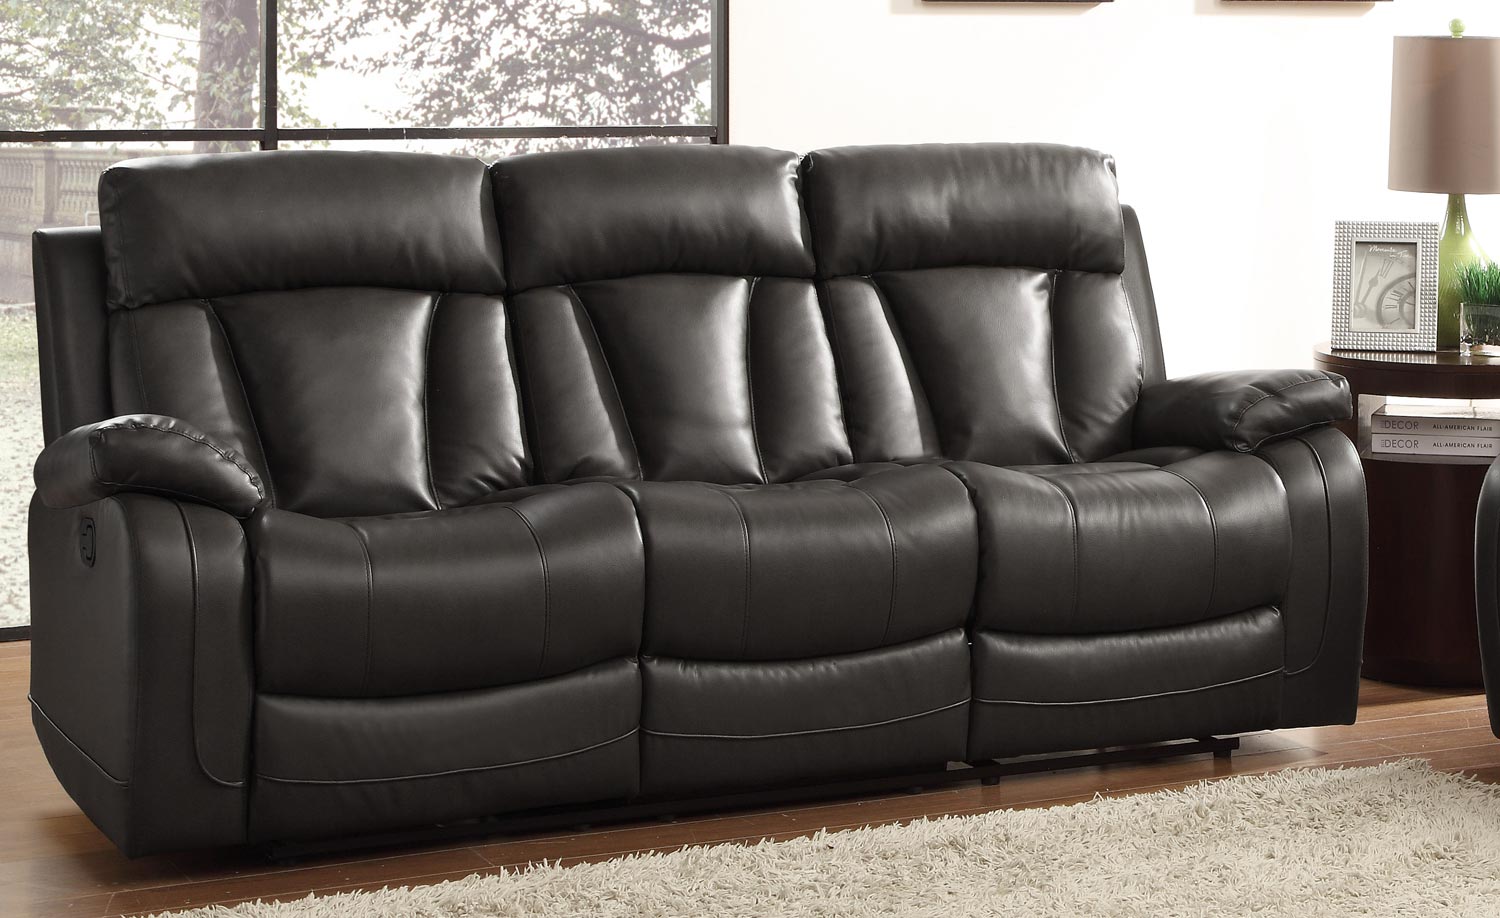 Homelegance Ackerman Double Reclining Sofa - Black Bonded Leather Match